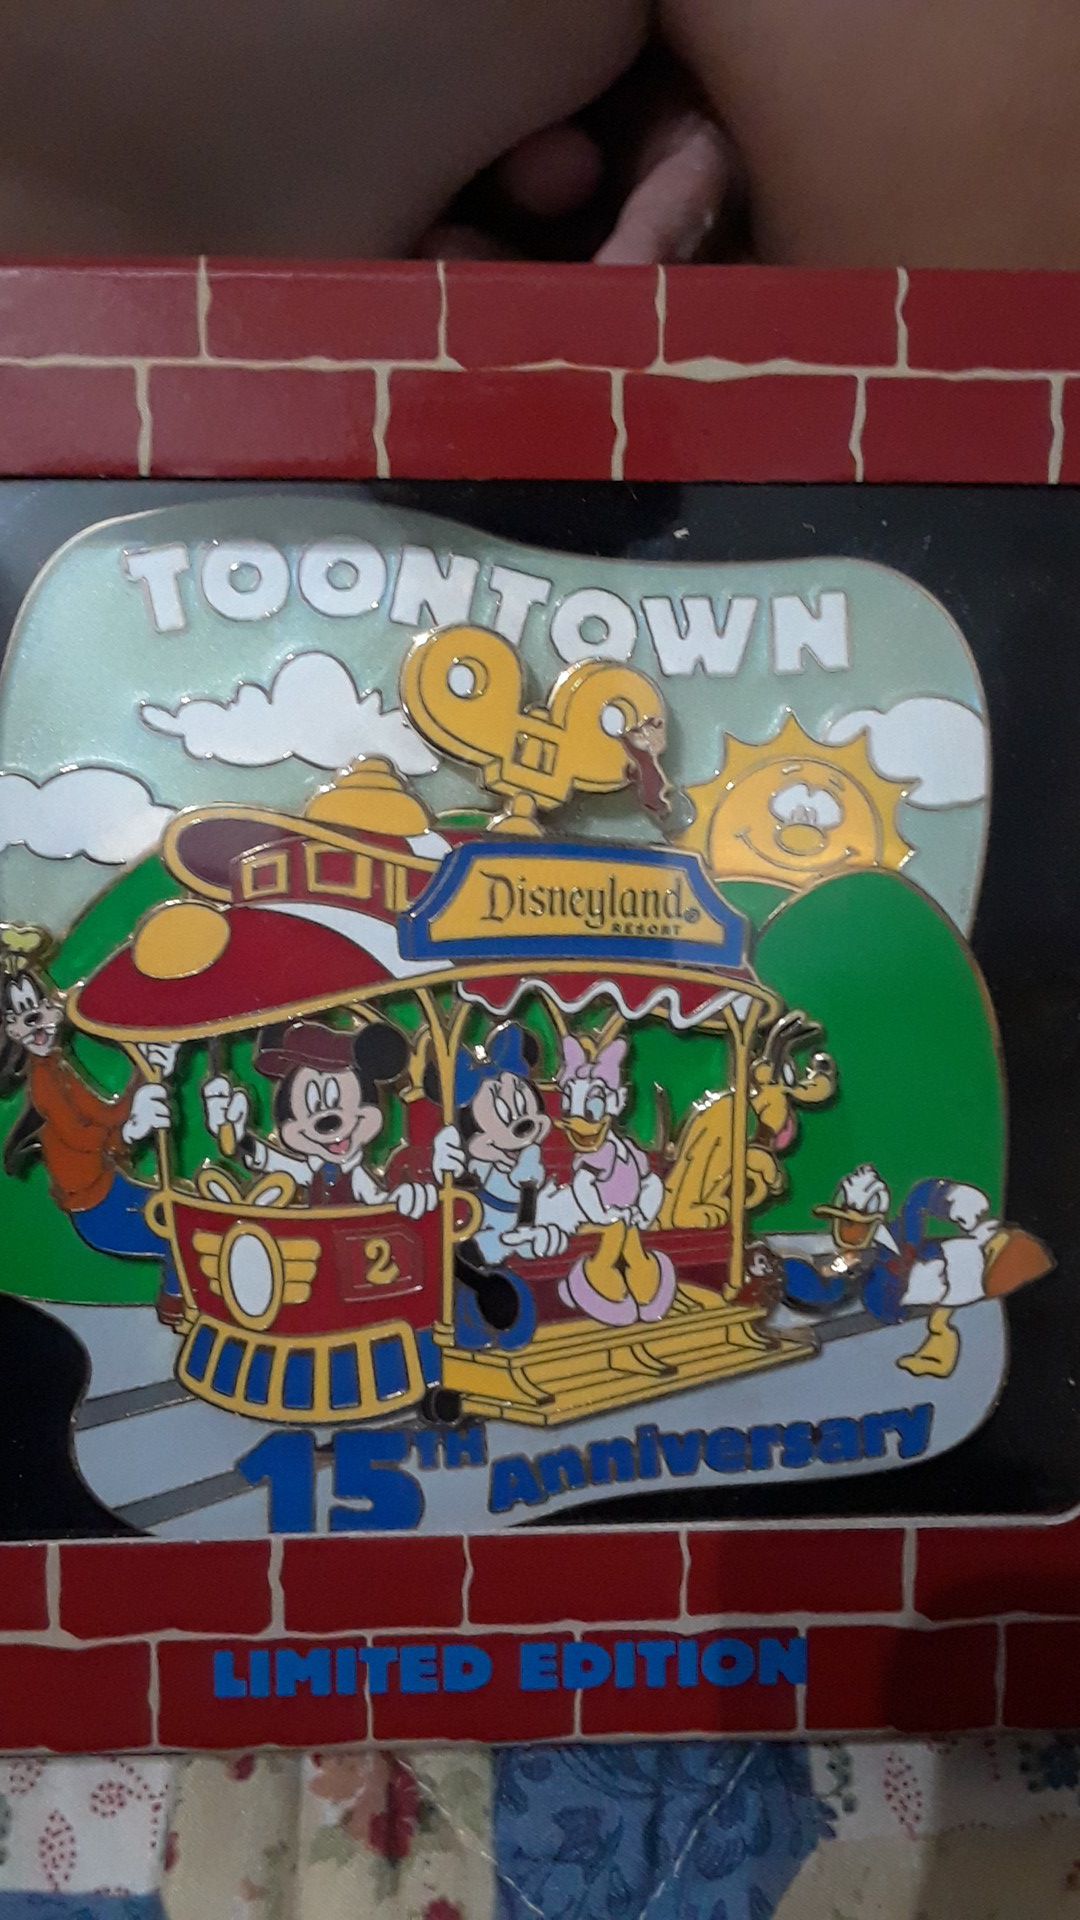 Disney 15th anniversary toontown pin